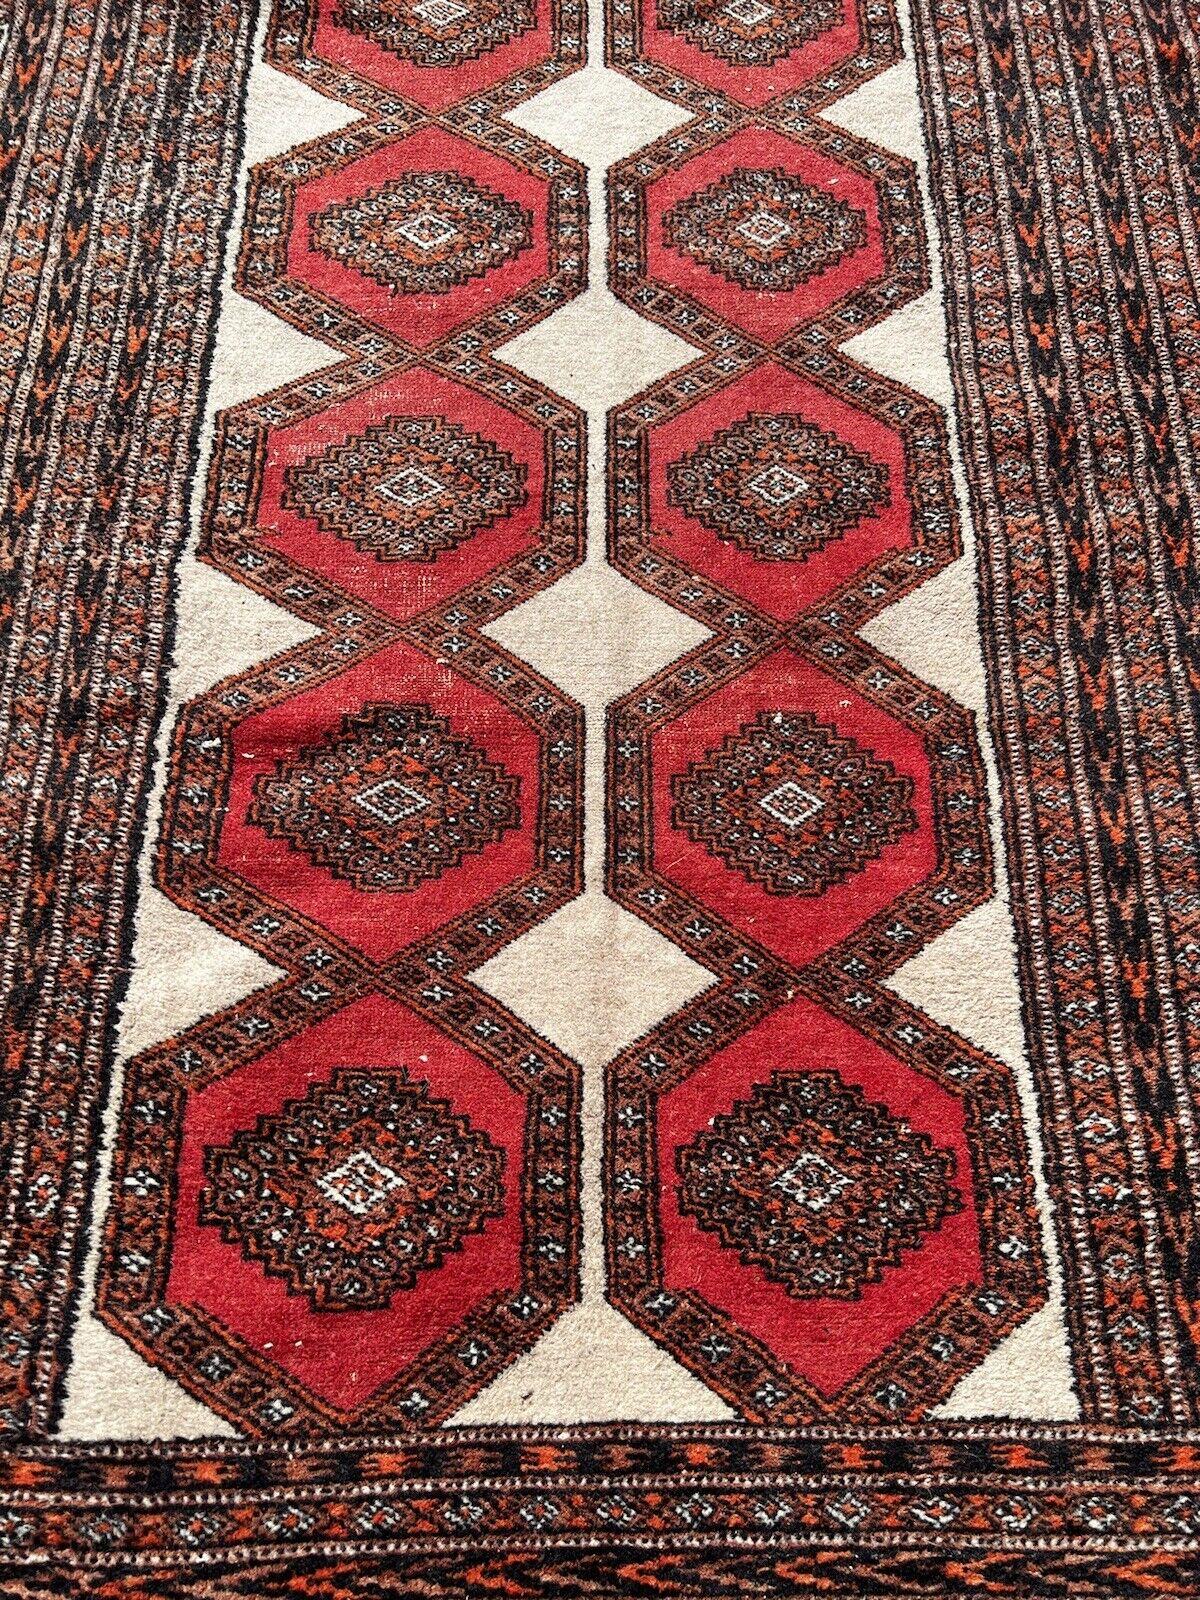 Handmade Vintage Uzbek Bukhara Rug 4.1' x 6.3', 1960s - 1S23 For Sale 5